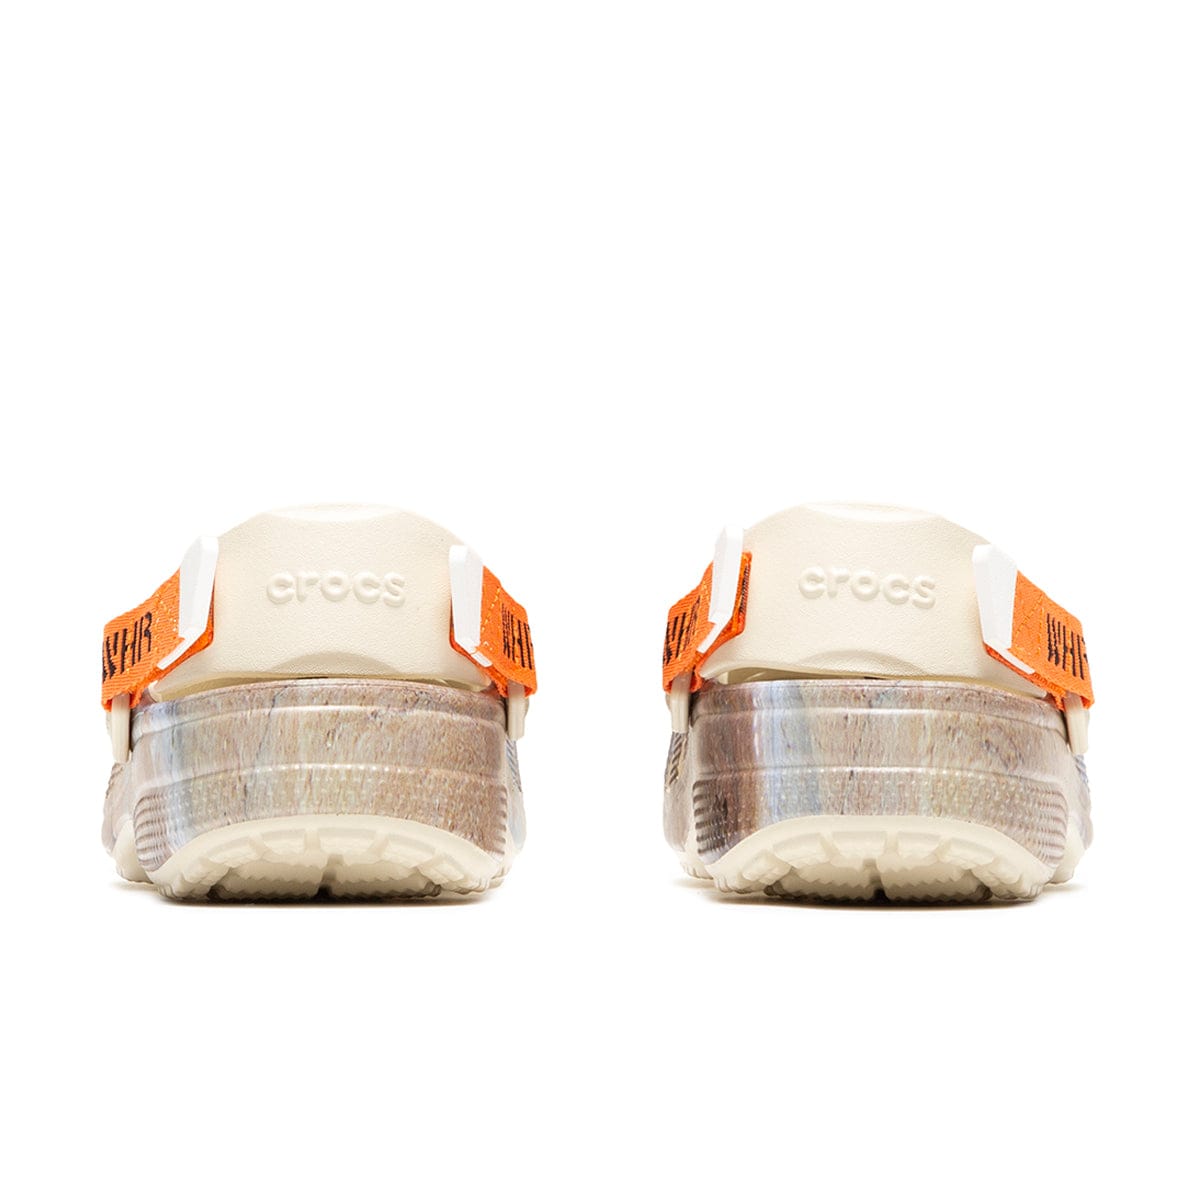 Crocs Sandals X WESTERN HYDRODYNAMIC RESEARCH CLASSIC CLOG